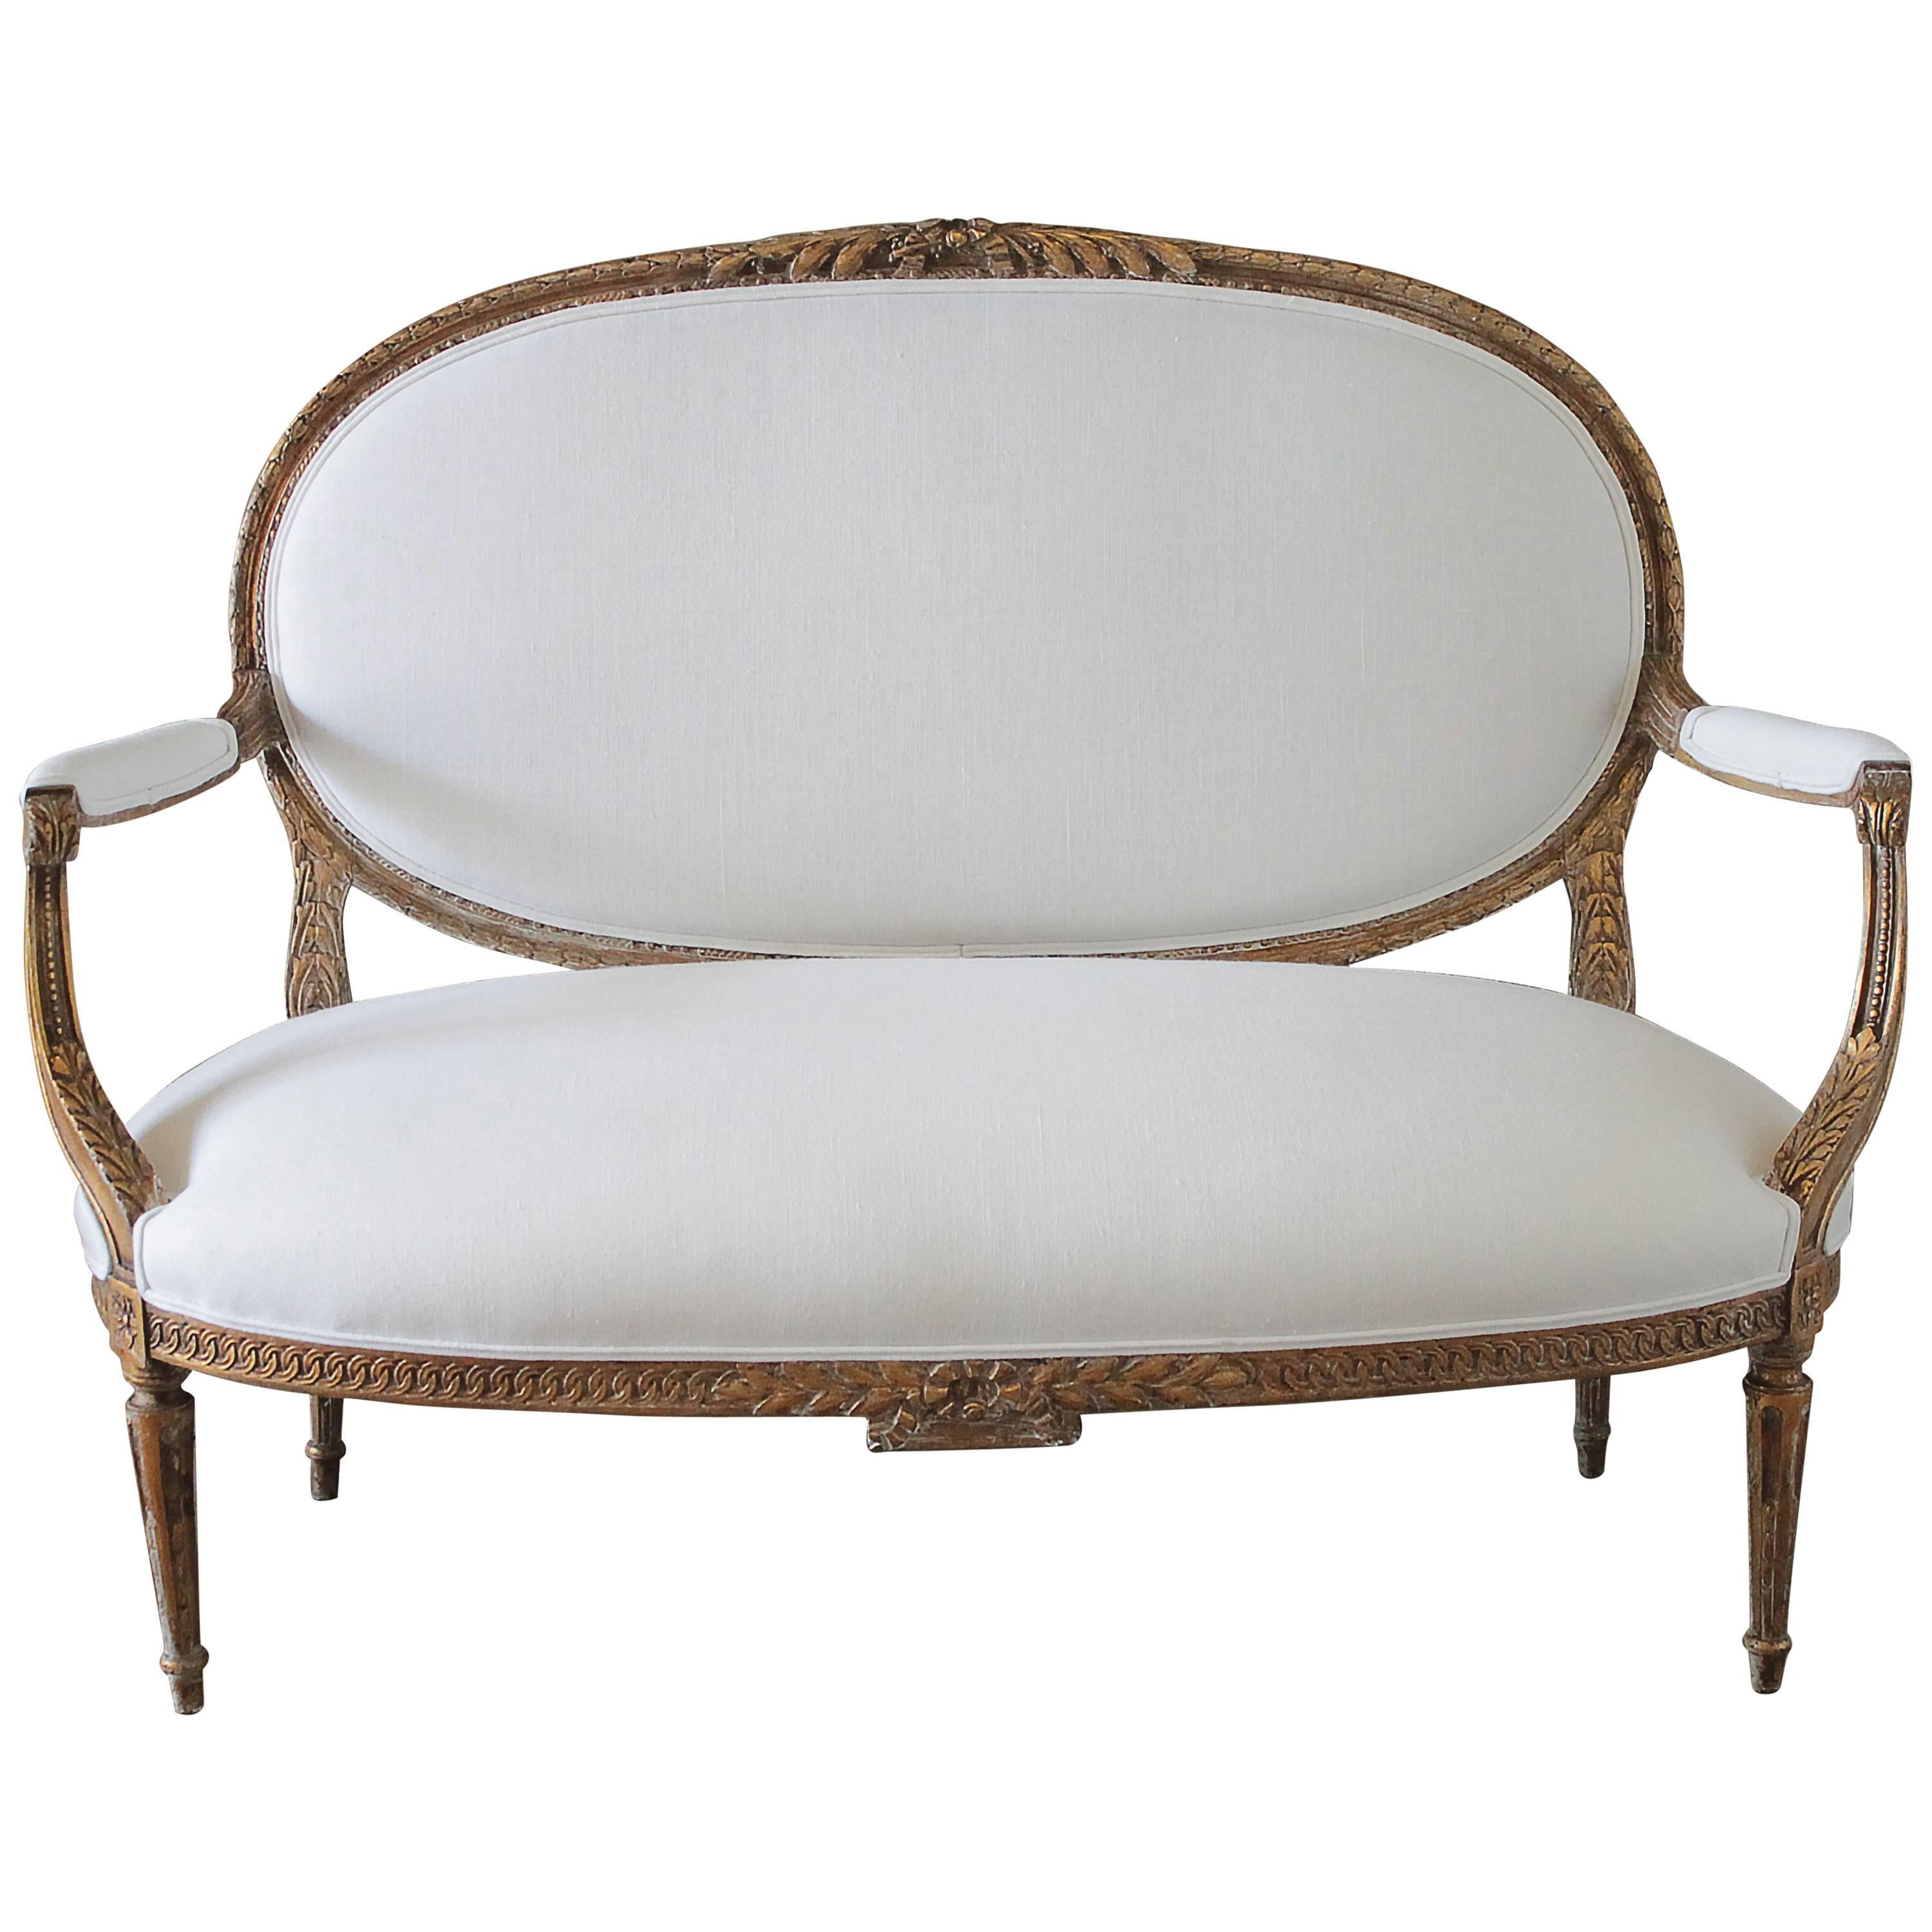 Louis XVI Style Giltwood Settee Upholstered in White Irish Linen